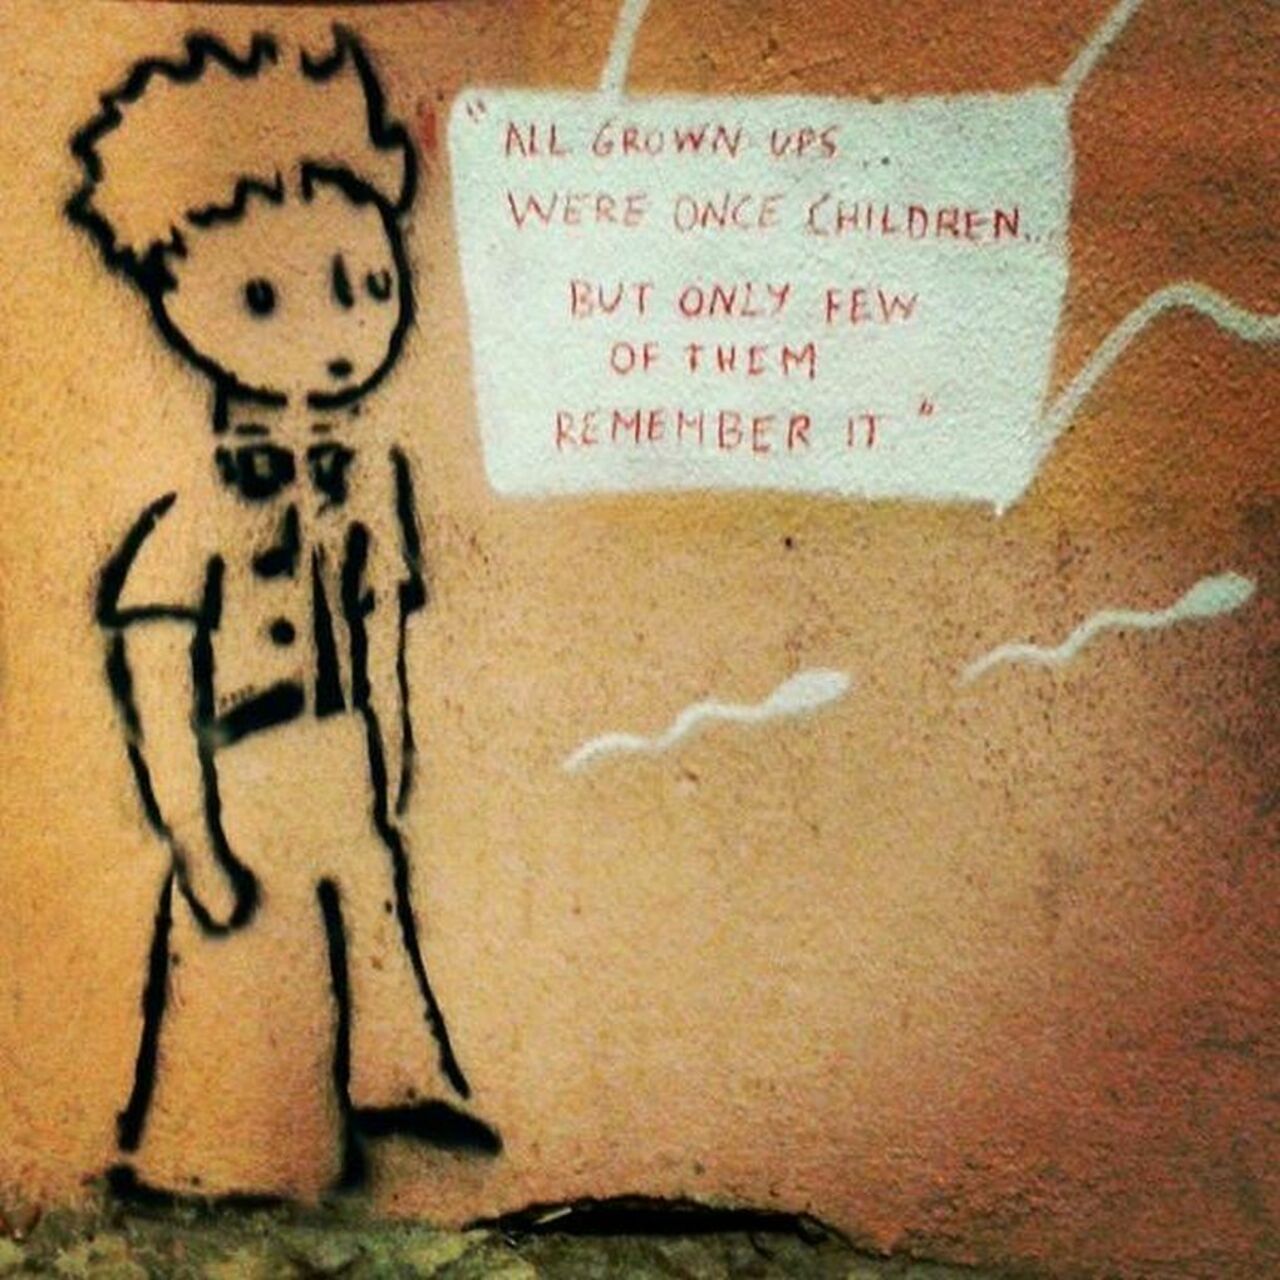 #StreetArtSaturday #MeaningOfLife I love this more unusual #Stencil #Streetart on the origin of grownups. https://t.co/j2Y0YumpgY